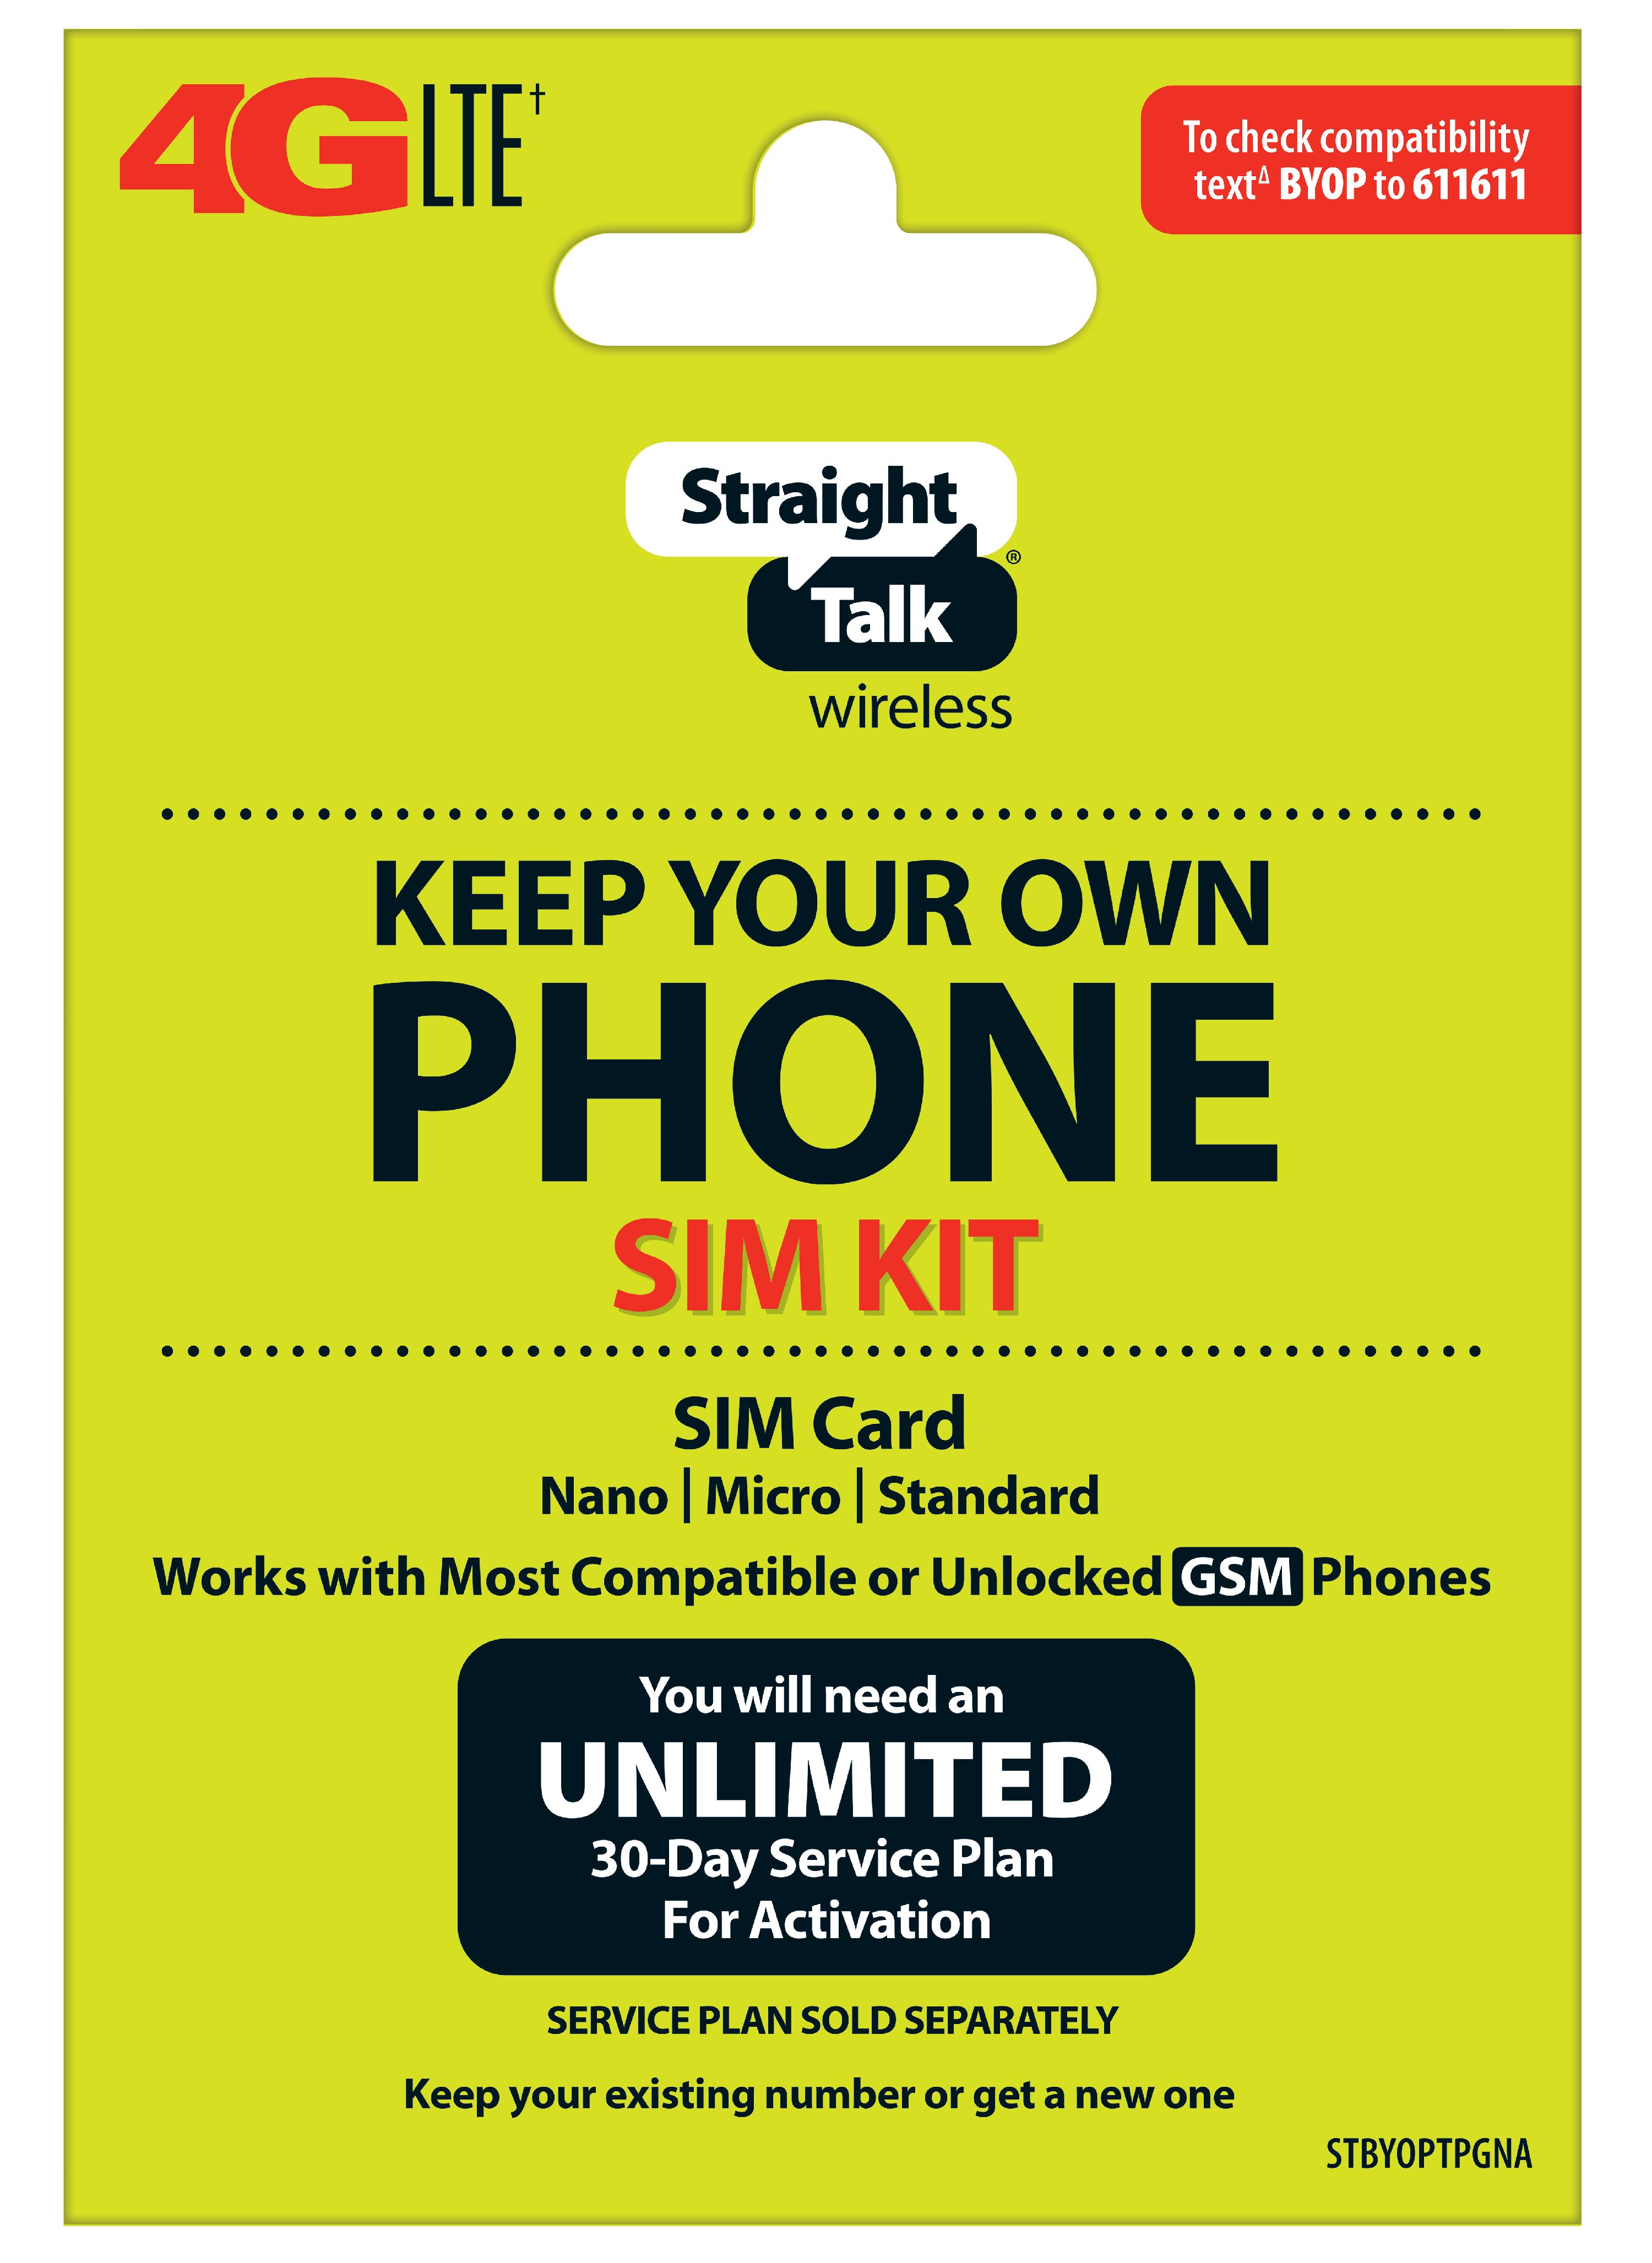 Straight Talk iPhone Sim Card Kit - image 2 of 2